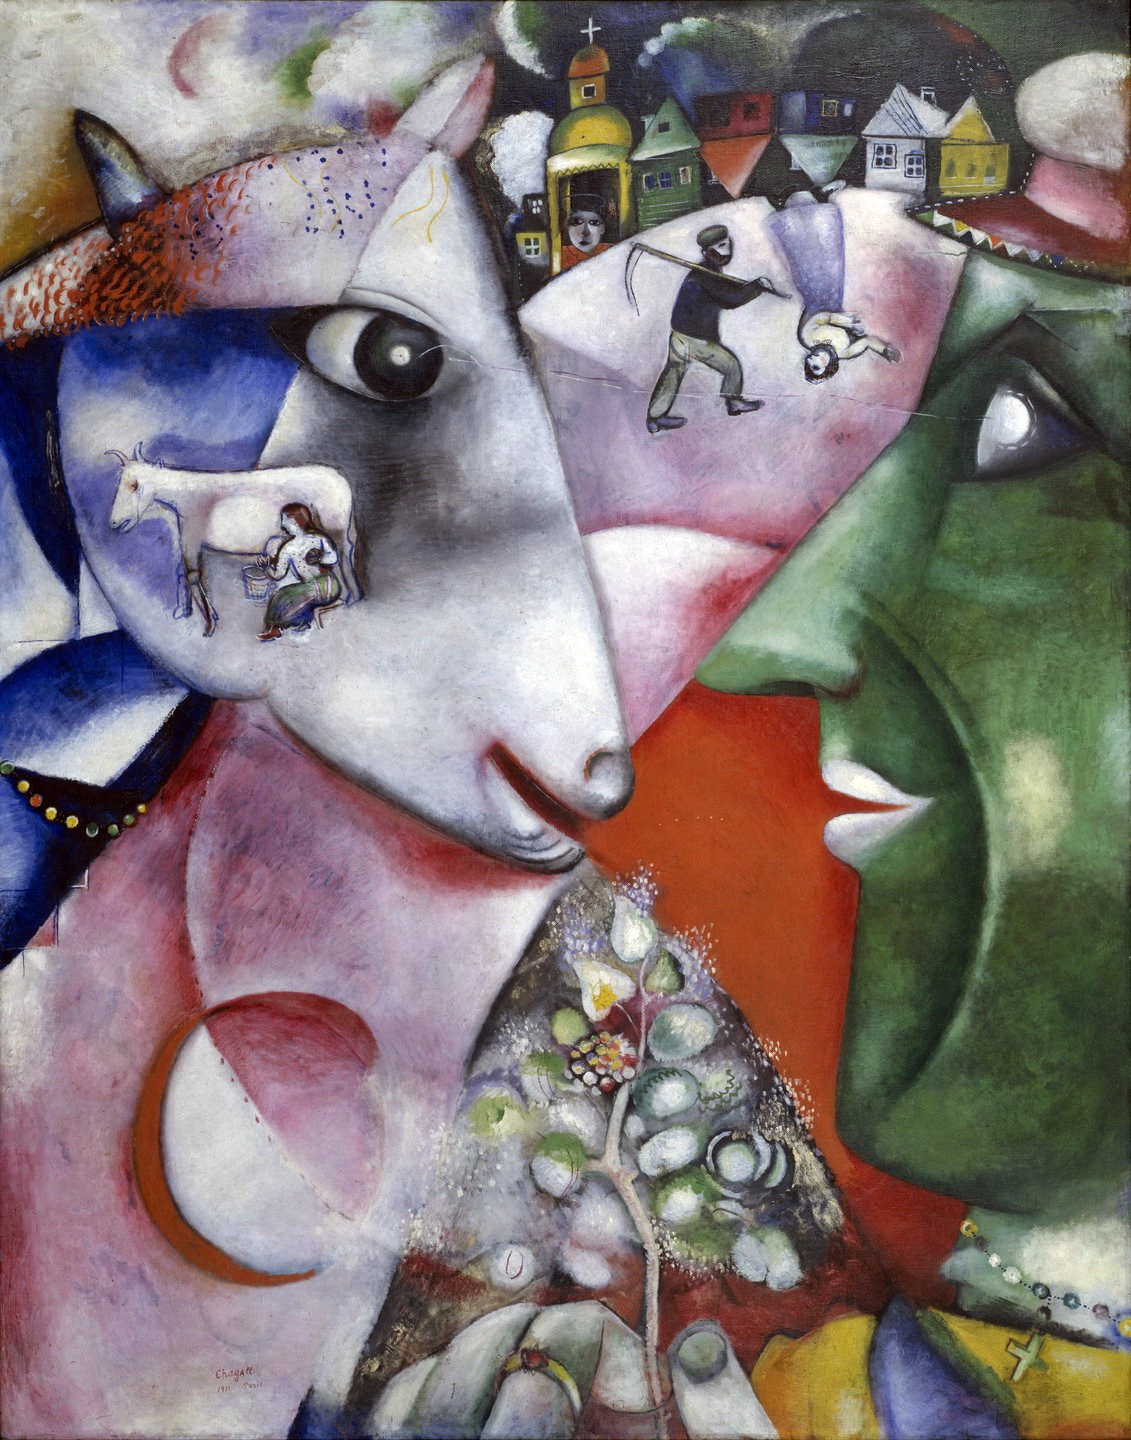 Marc+Chagall-1887-1985 (78).jpg